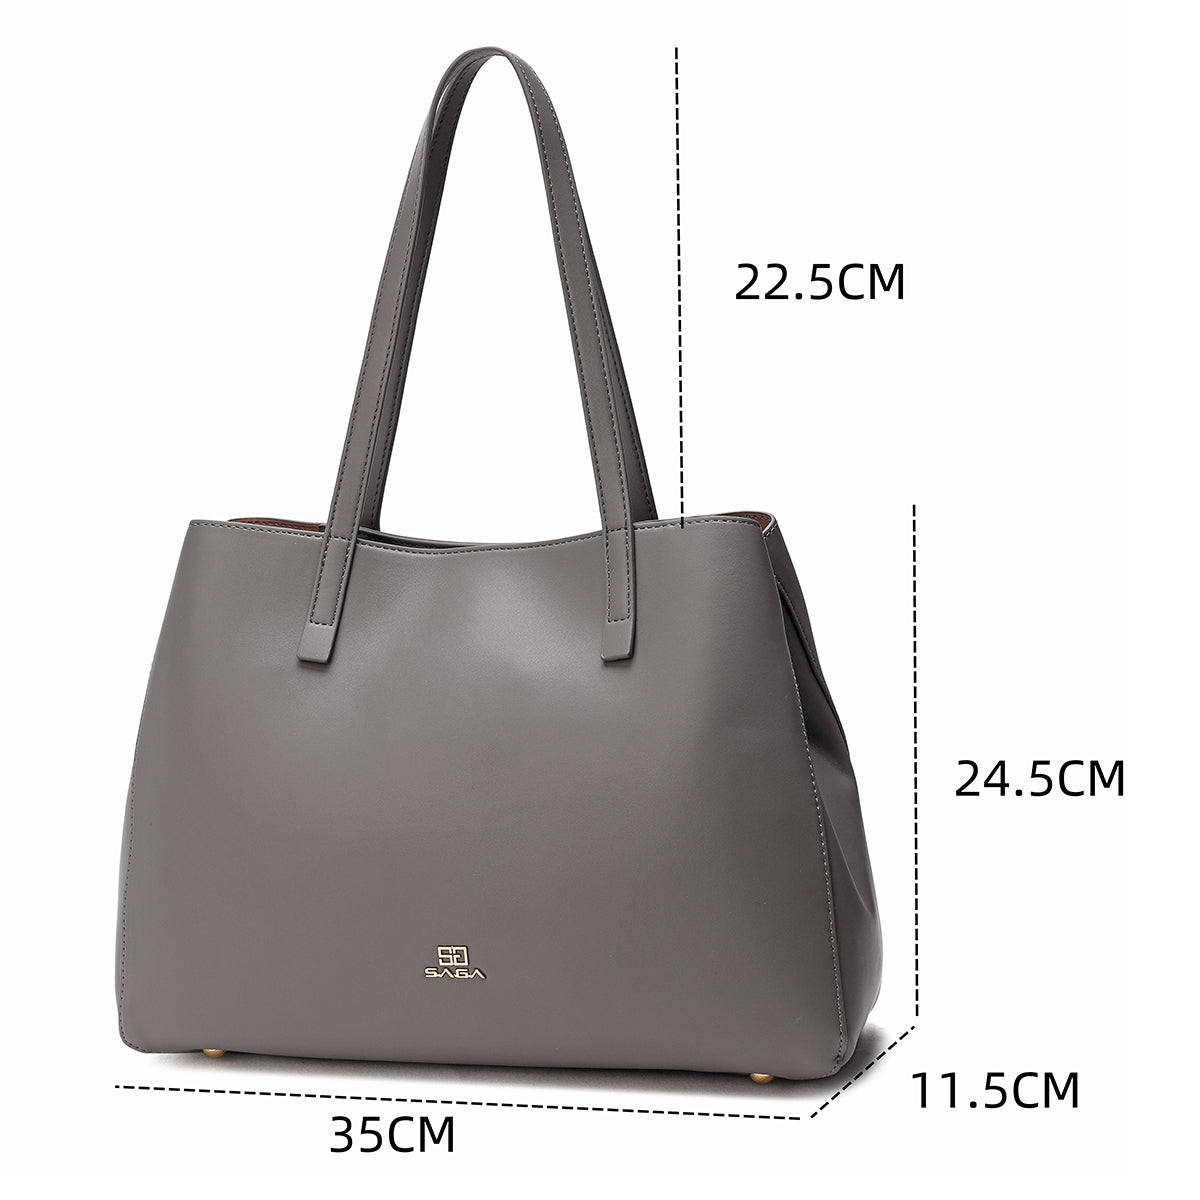 Elegant handbag, simple design, wide, 35cm wide, in three colors